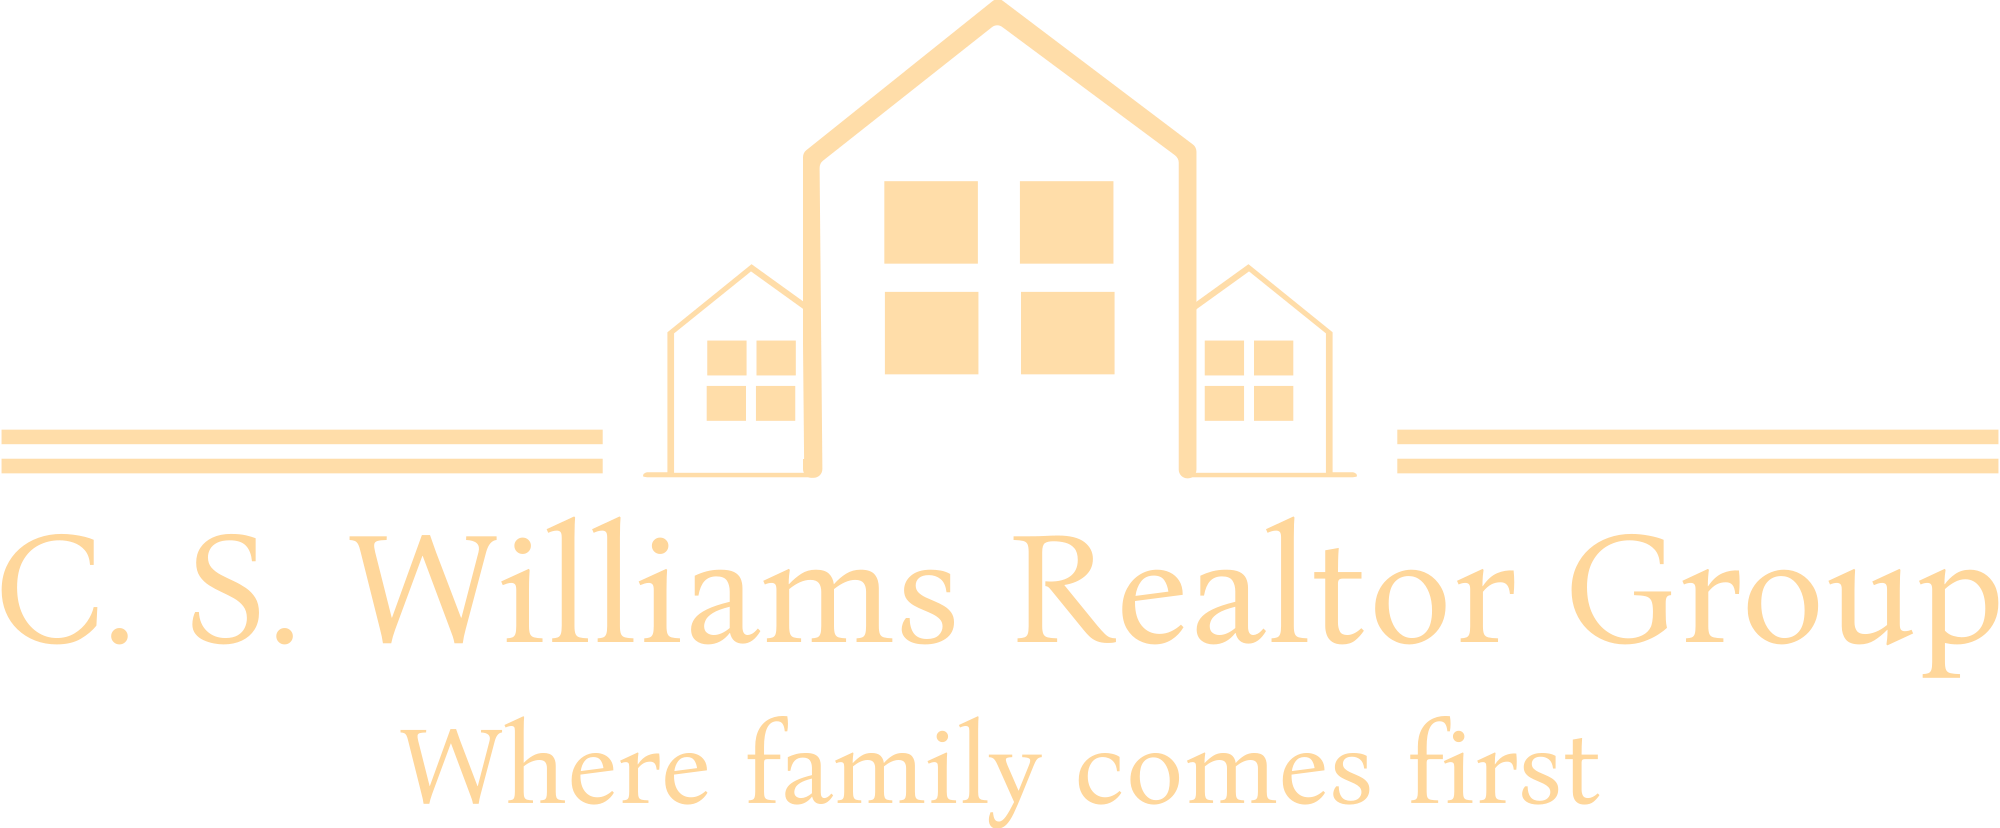 c-s-williams-realtor-group-high-resolution-logo-transparent